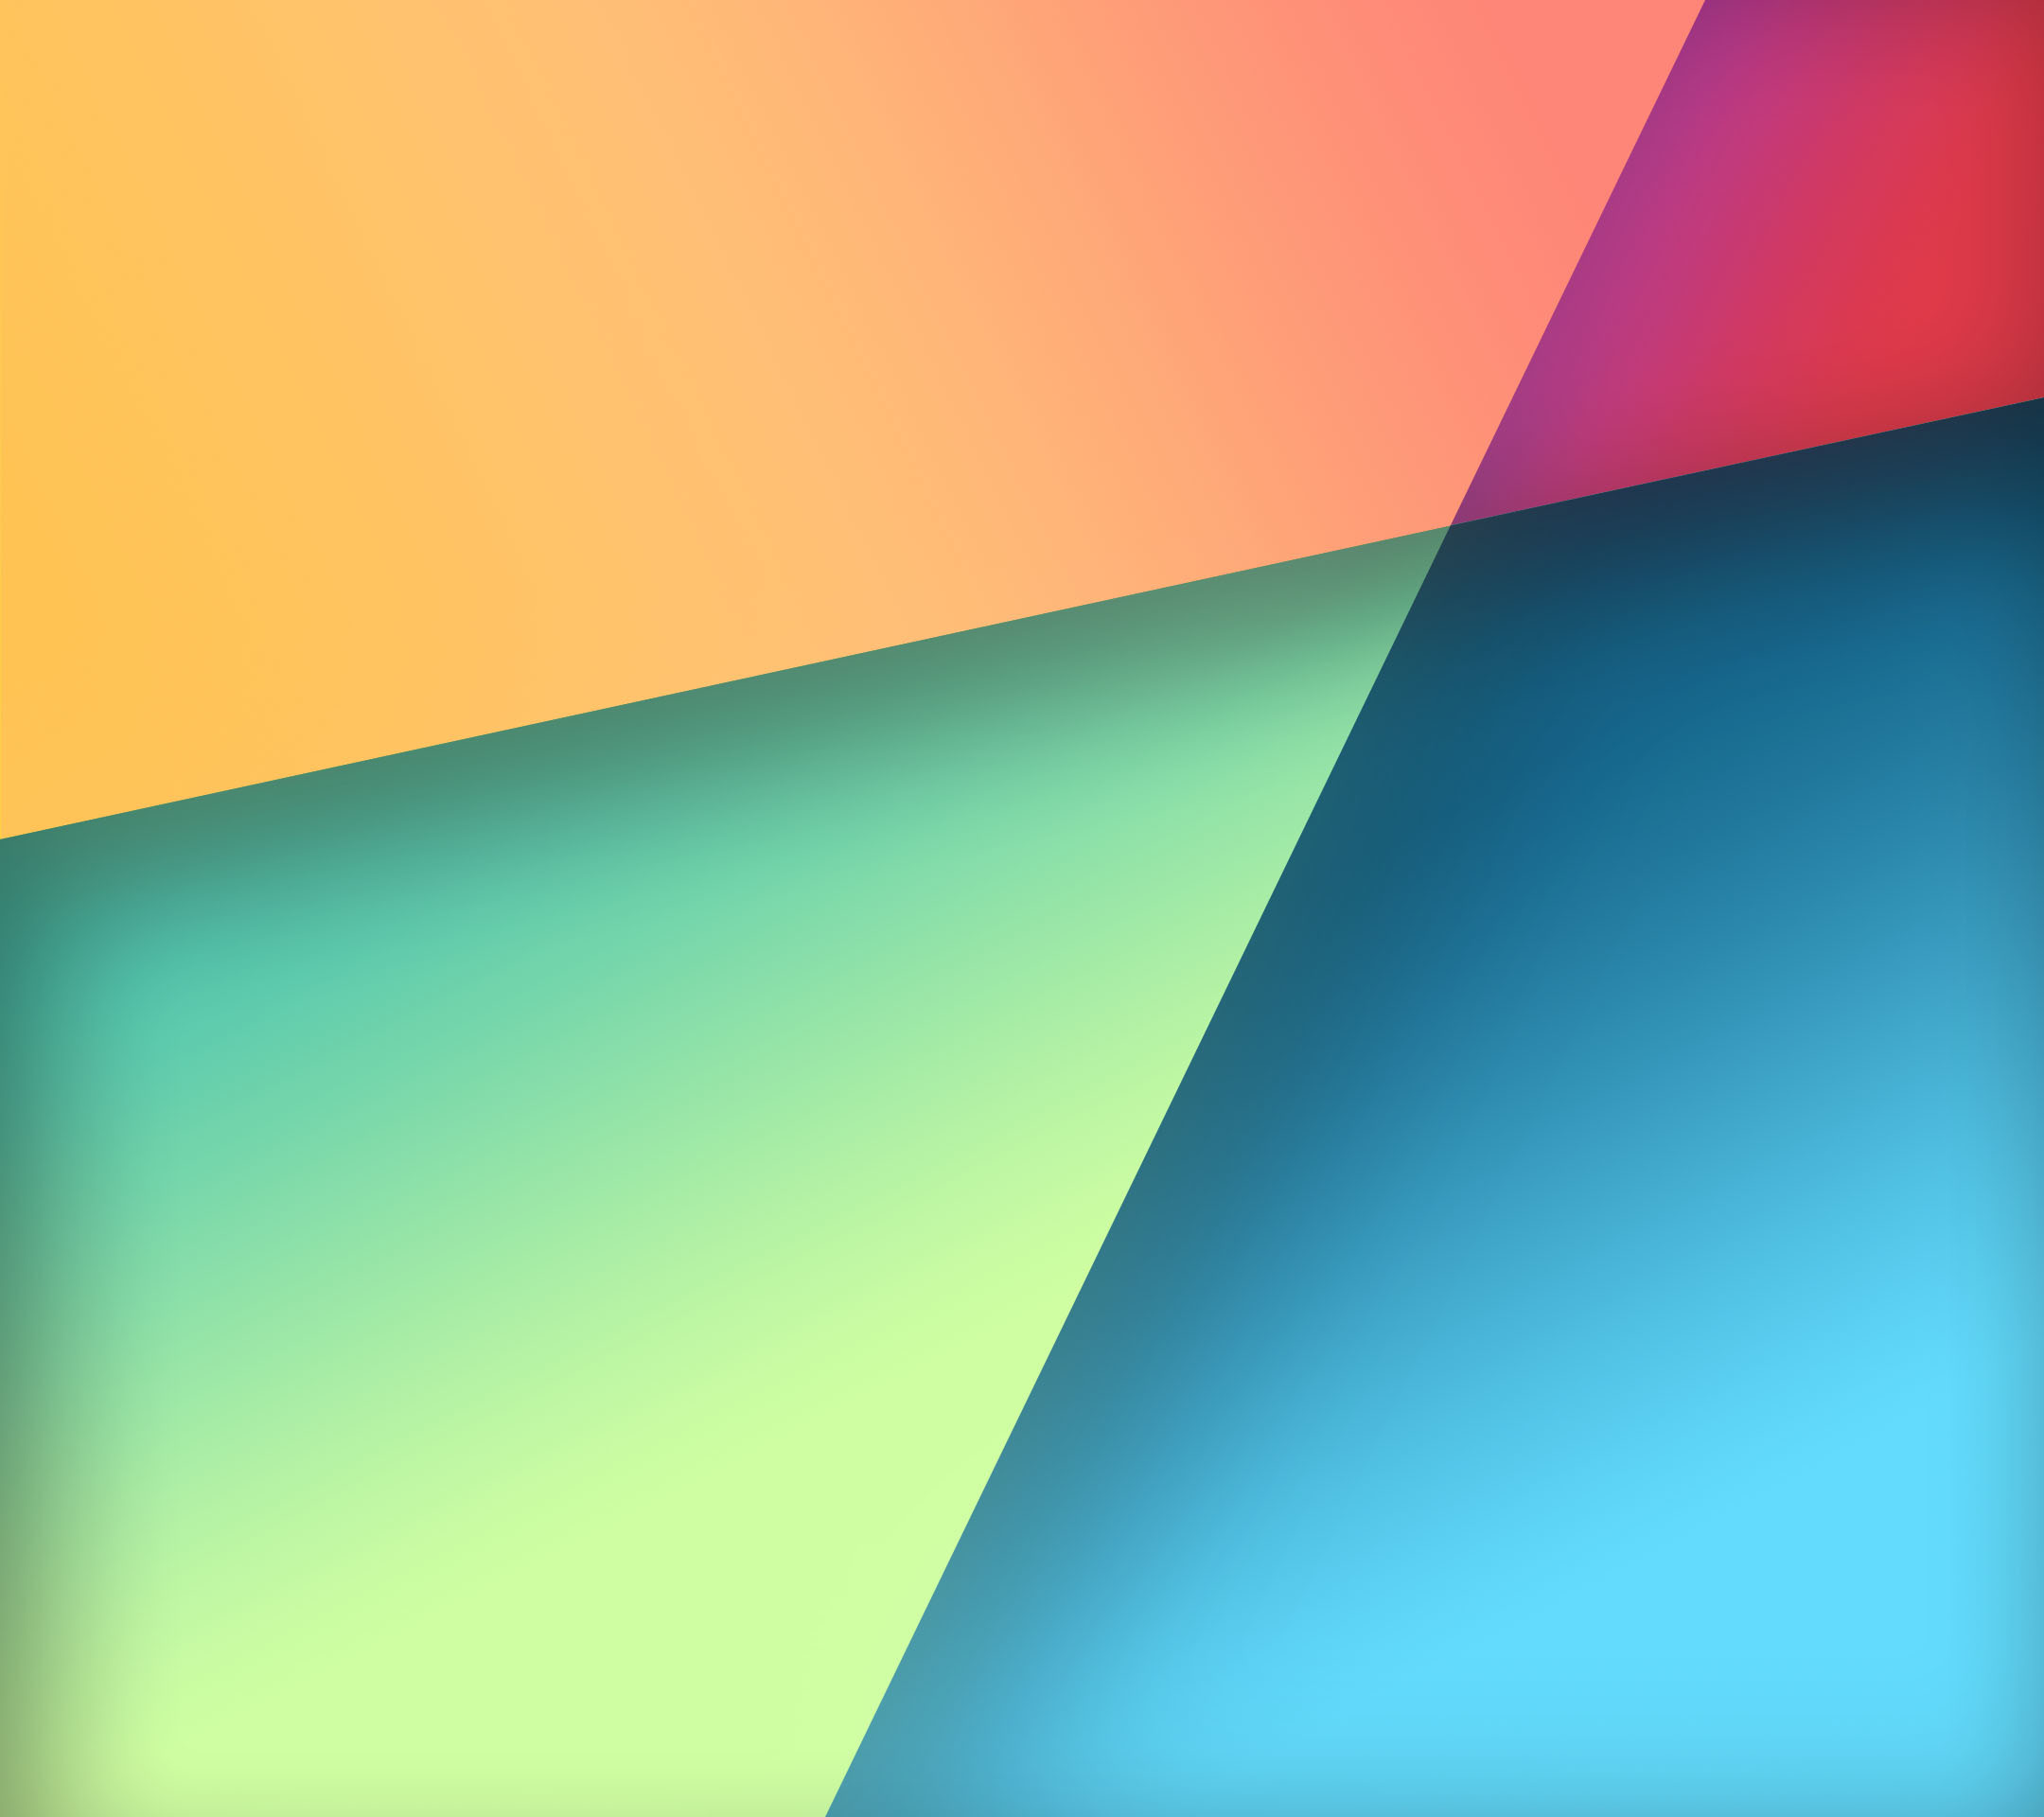 Nexus 7 Stock Wallpaper In Google Play Colors By R3conn3r Google Play Wallpaper Phone 2160x19 Wallpaper Teahub Io